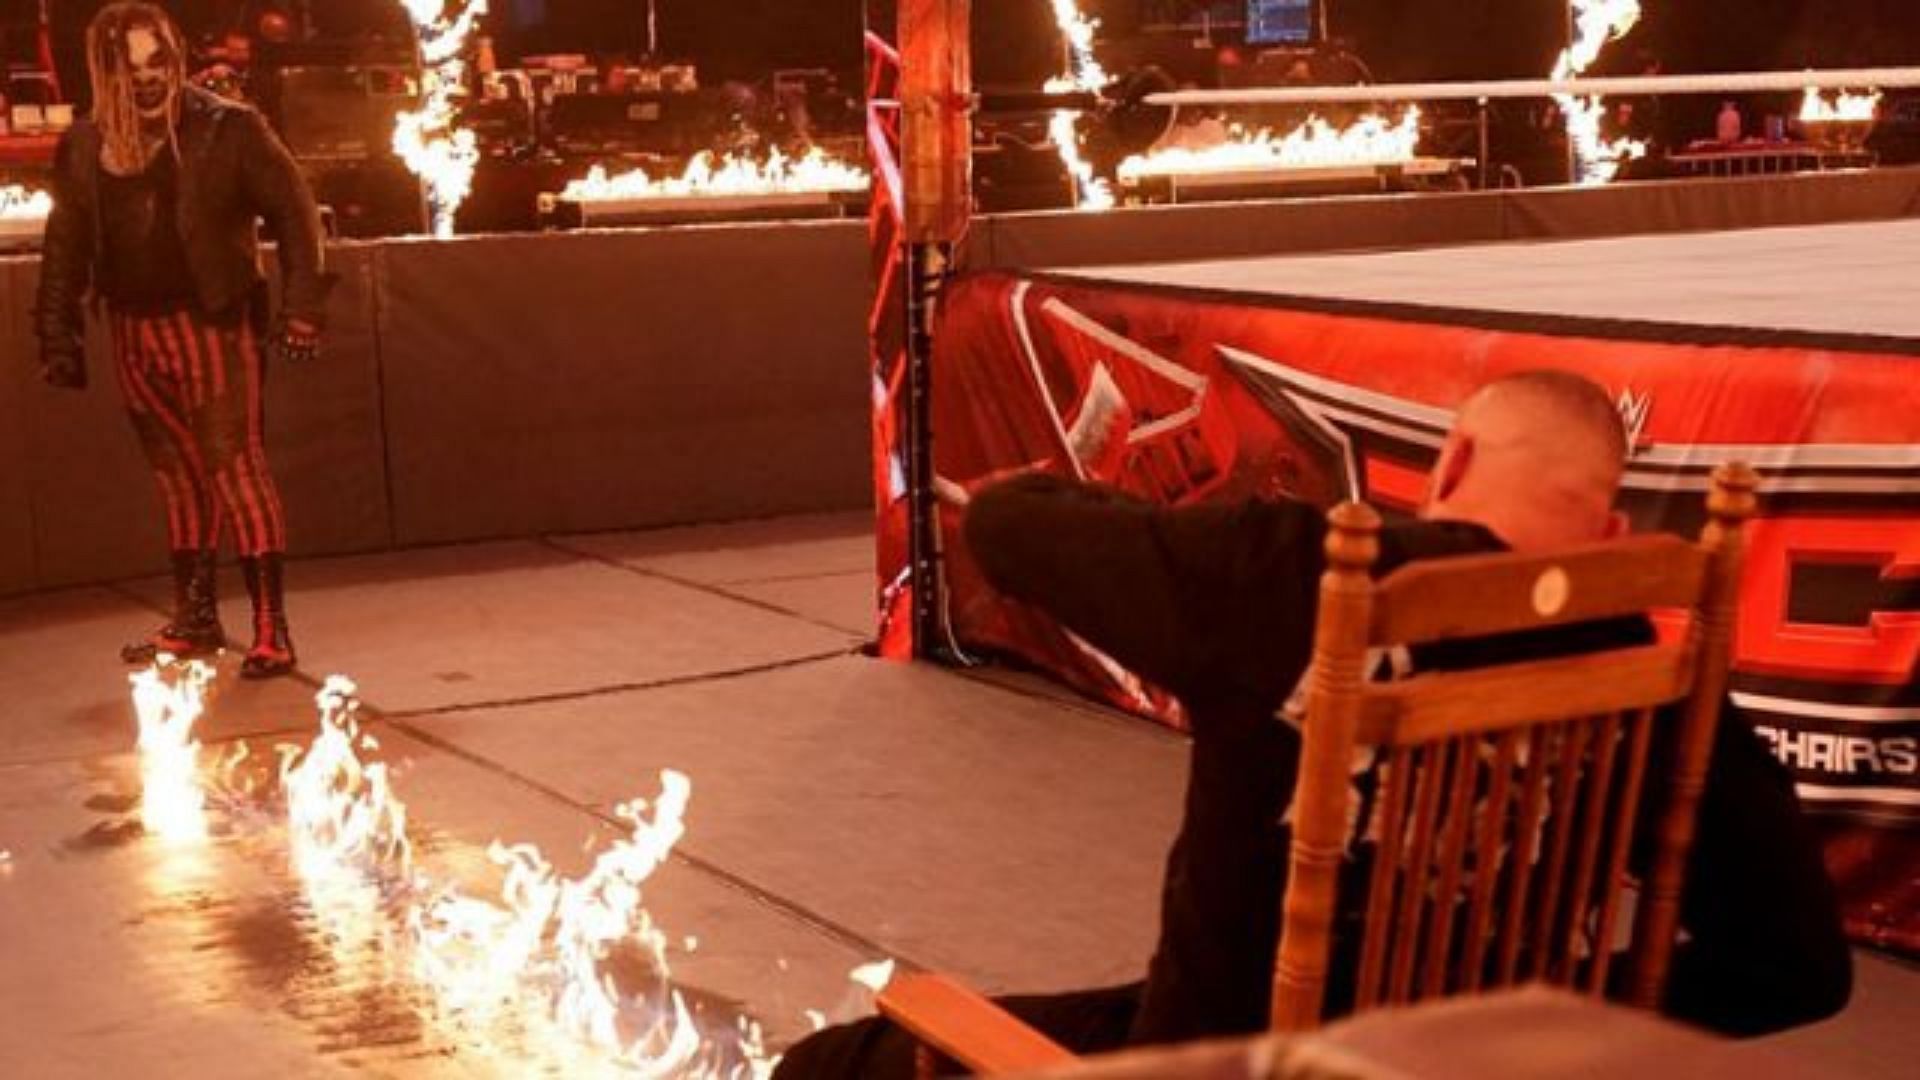 Bray Wyatt vs. Randy Orton at TLC 2020 in a Firefly Inferno match